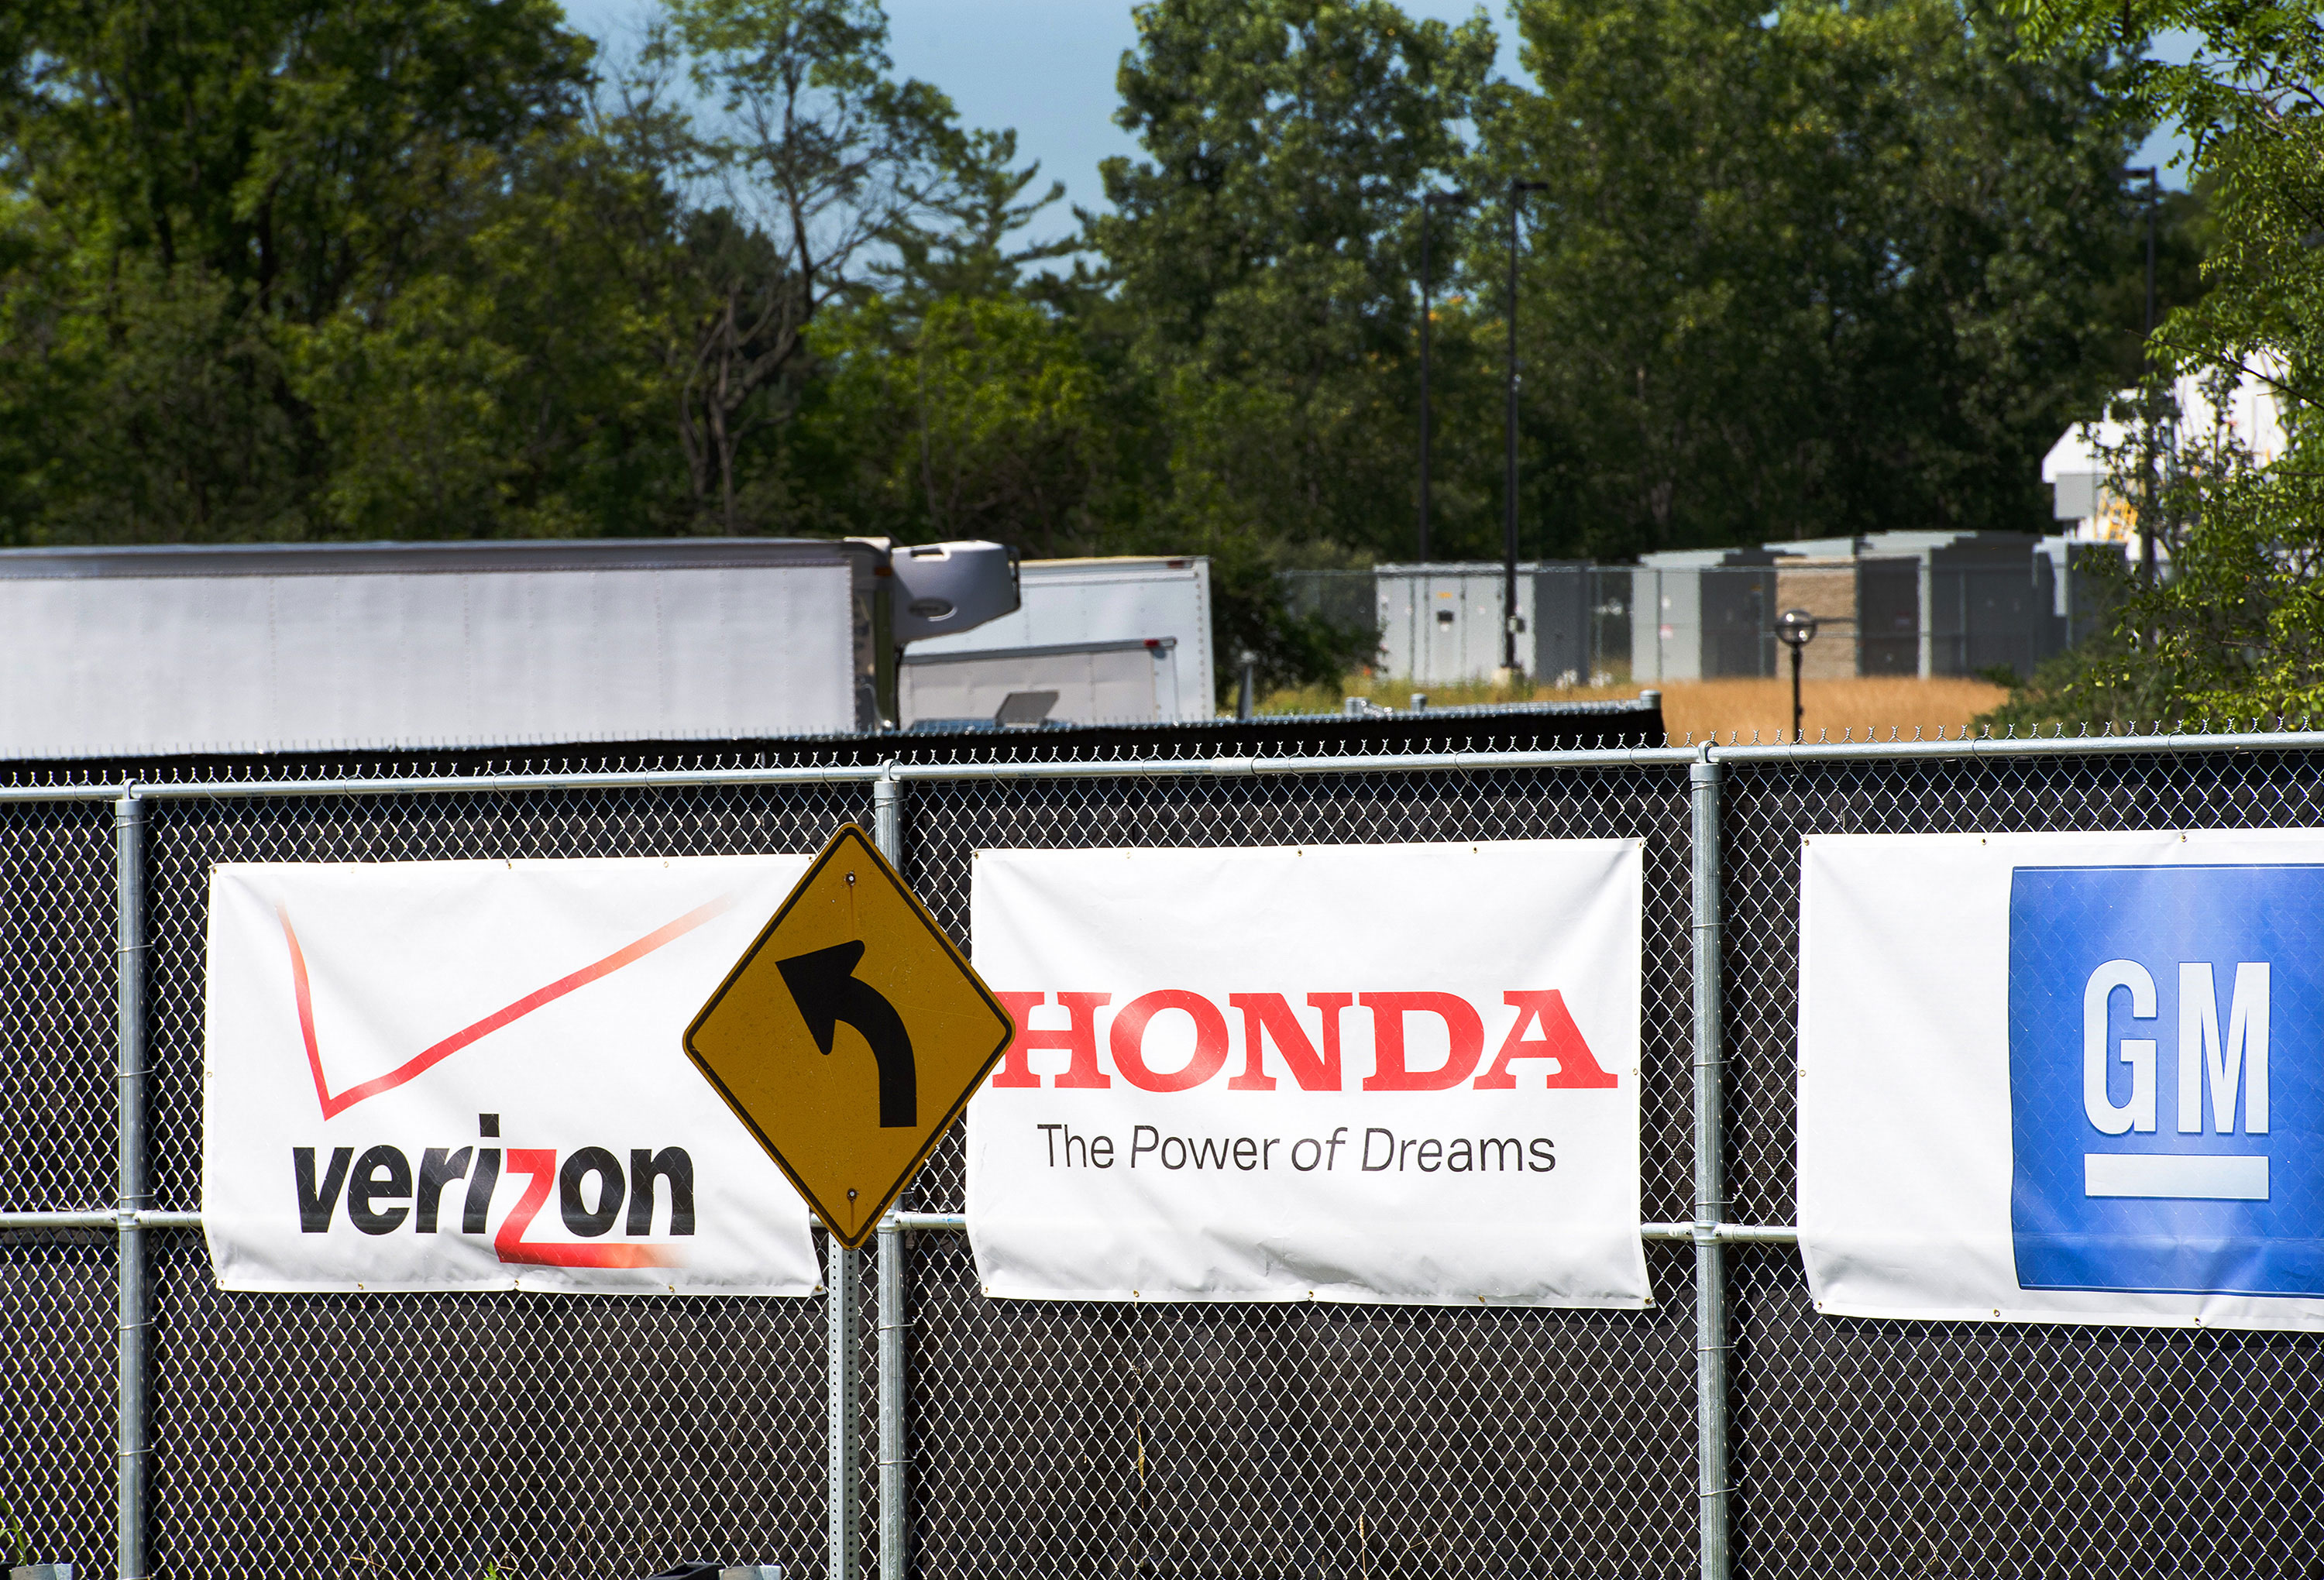 verizon honda GM logos on banners at M city test facility